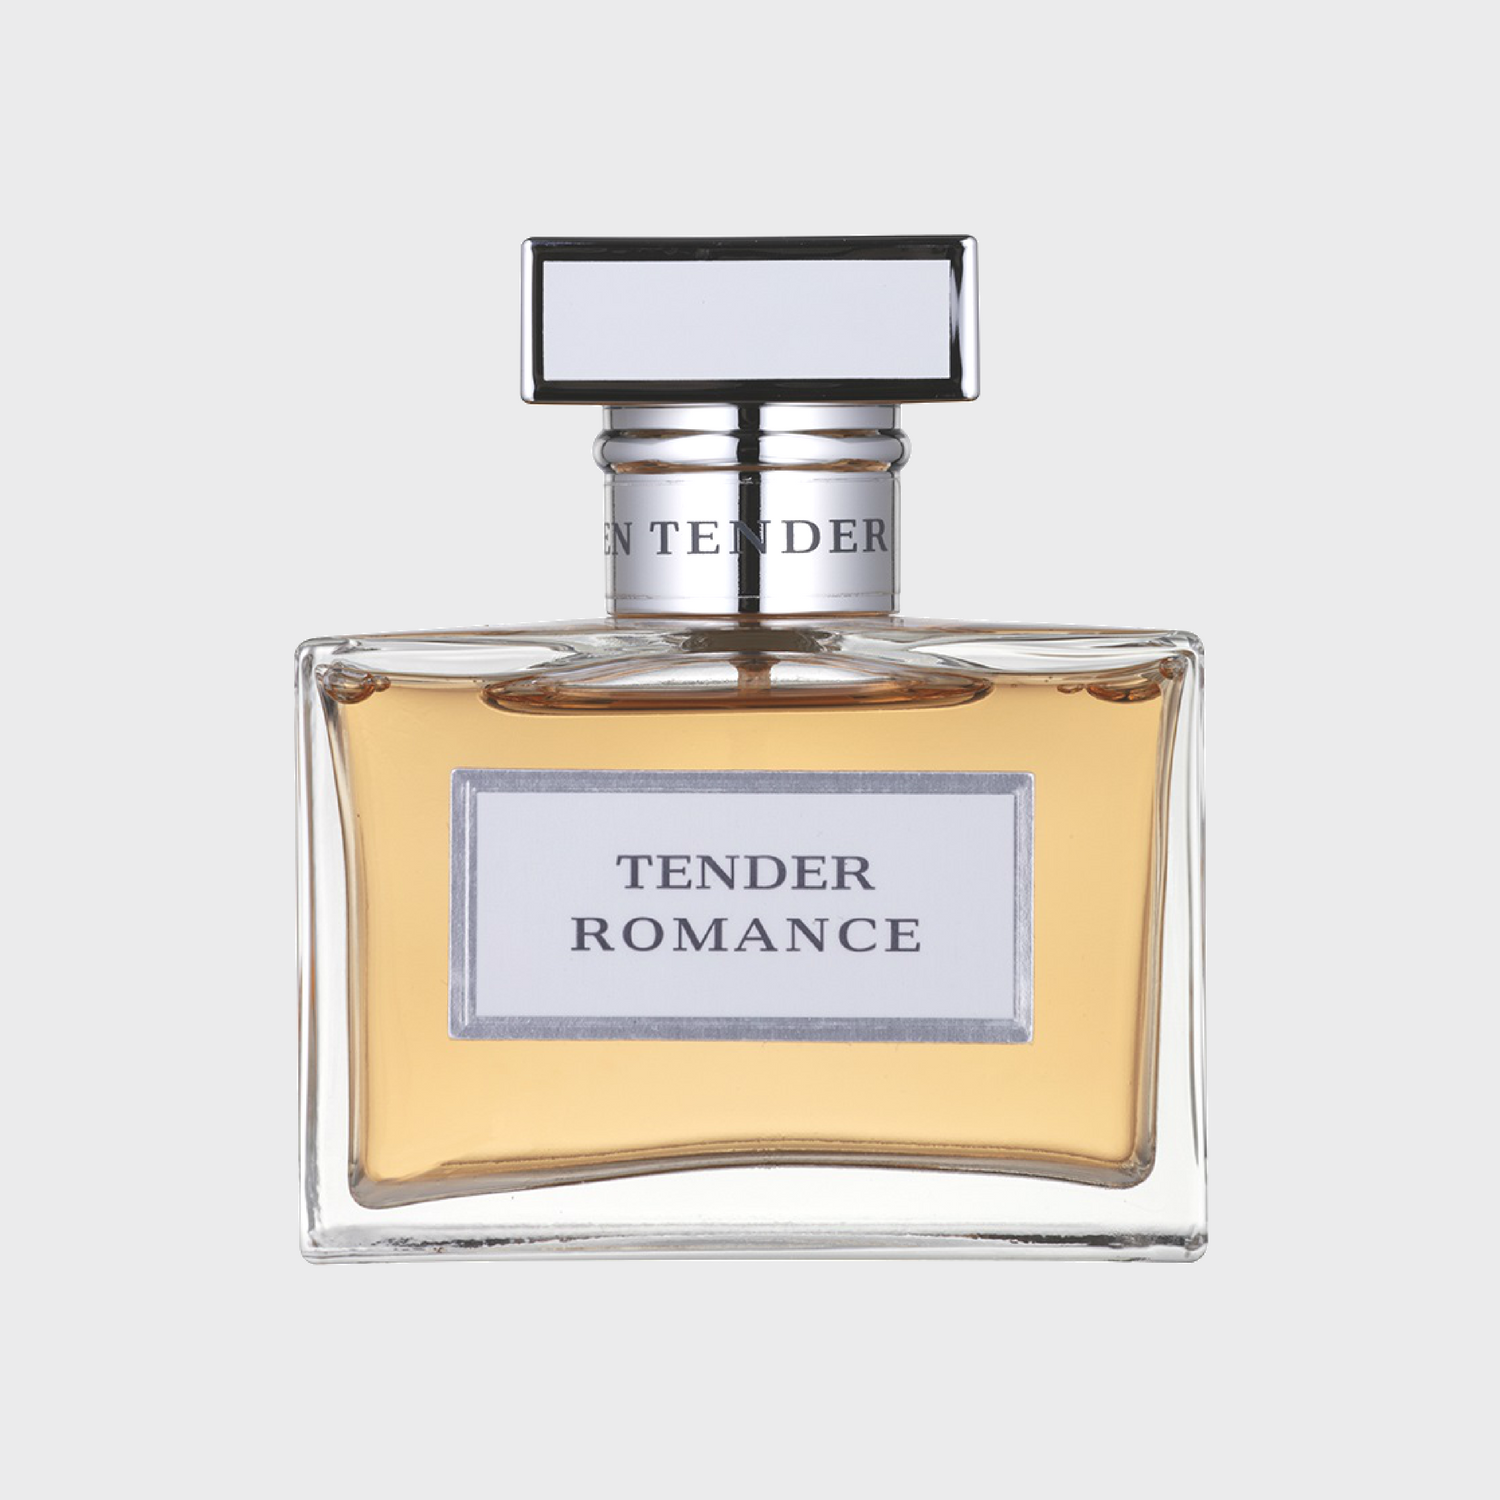 Tender Romance Ralph Lauren Perfume Review | TIFF BENSON